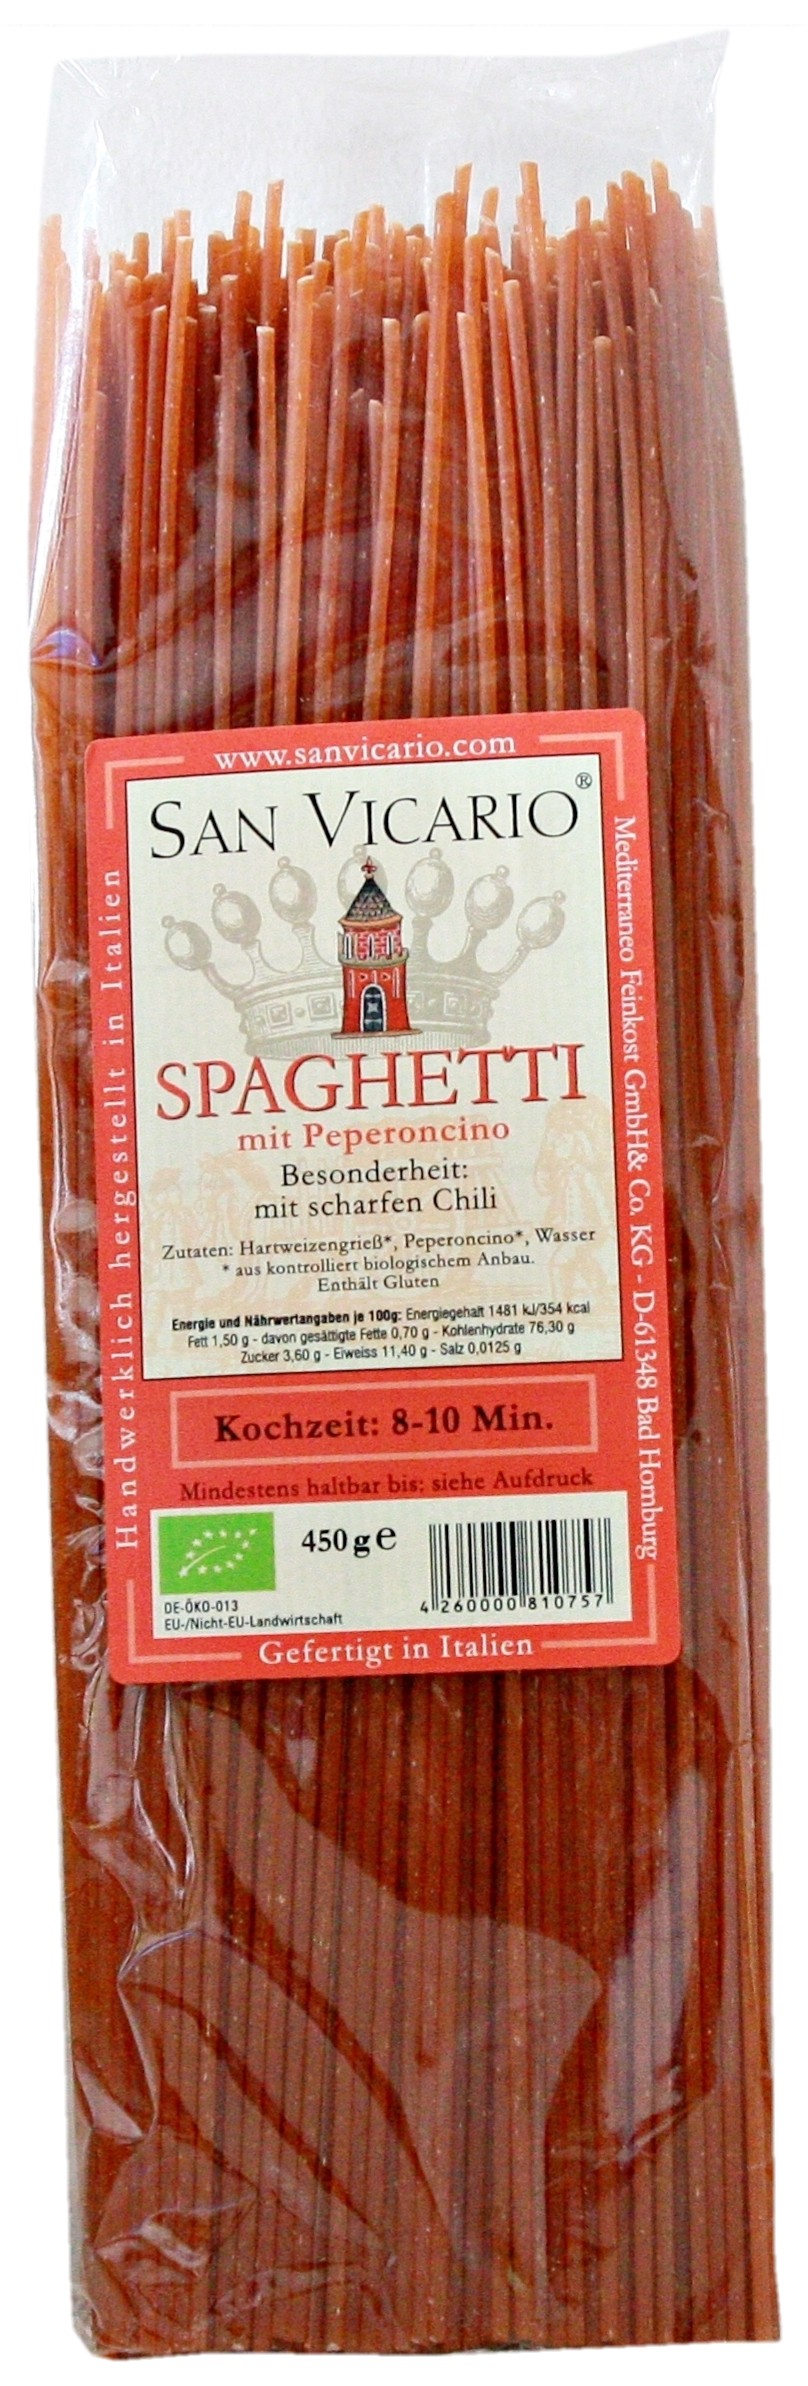 Spaghetti with Chili